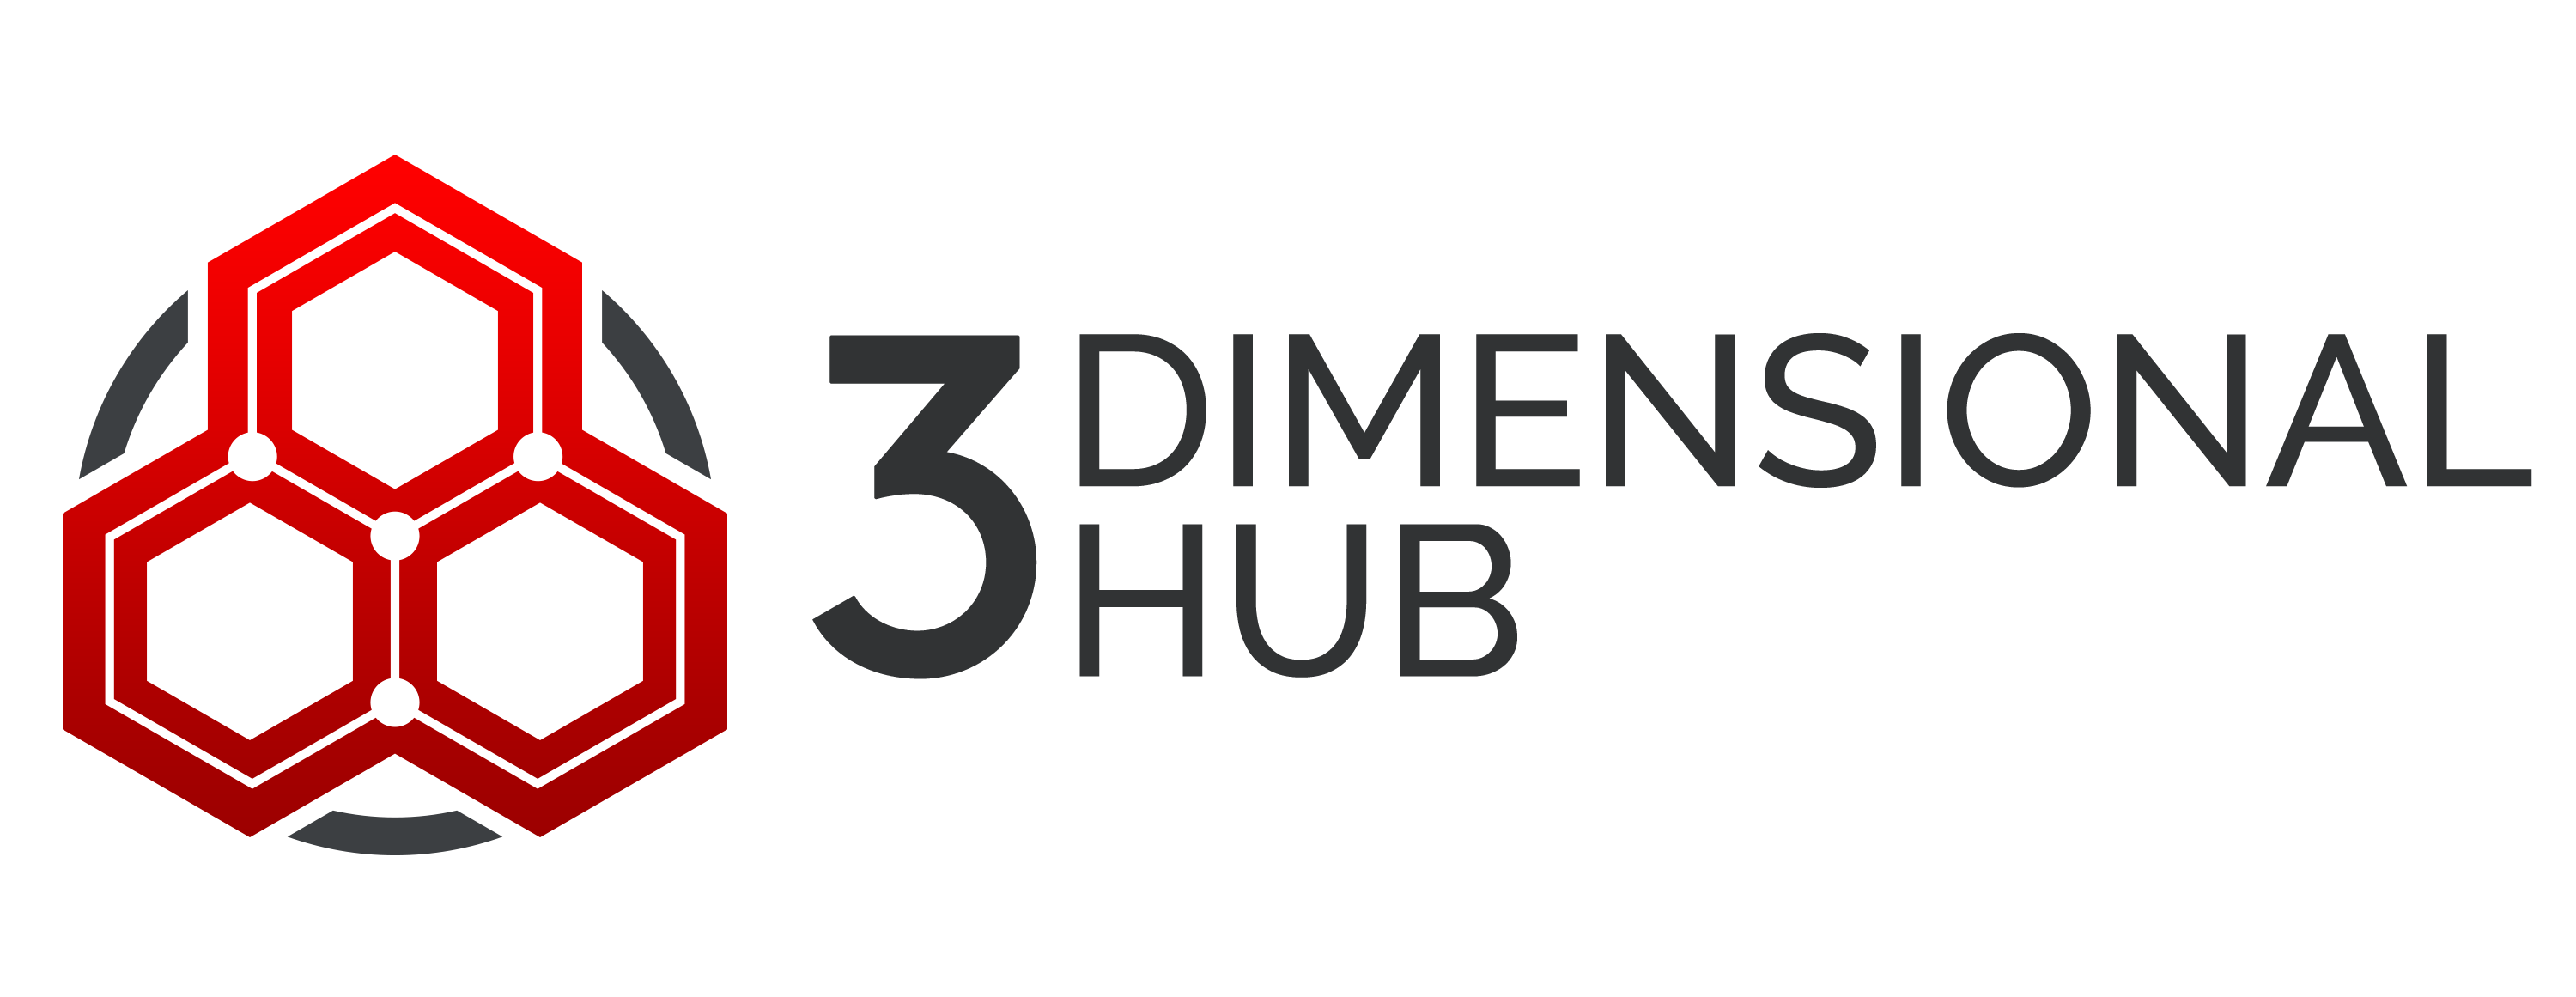 Three Dimensional HUB